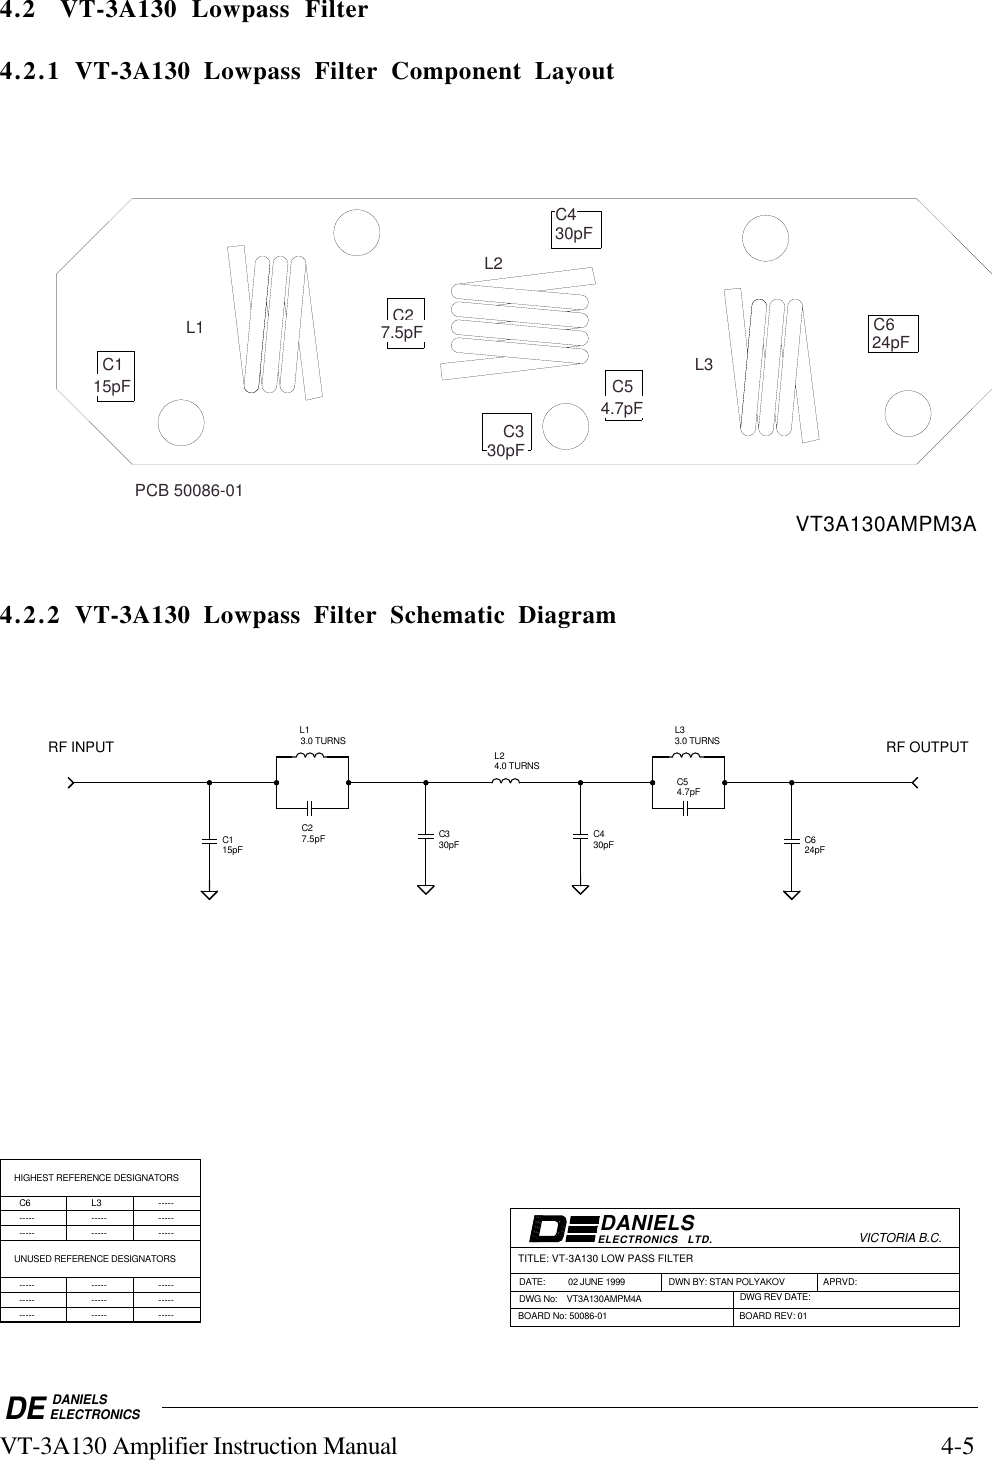 DE DANIELSELECTRONICSVT-3A130 Amplifier Instruction Manual 4-54.2 VT-3A130 Lowpass Filter4.2.1 VT-3A130 Lowpass Filter Component LayoutPCB 50086-01C115pFC27.5pFC54.7pF24pFC630pFC430pFC3L1L2L3VT3A130AMPM3A4.2.2 VT-3A130 Lowpass Filter Schematic DiagramVICTORIA B.C.ELECTRONICS LTD.DANIELSDWG No:    VT3A130AMPM4ADATE:          02 JUNE 1999TITLE: VT-3A130 LOW PASS FILTERDWN BY: STAN POLYAKOVL3C6BOARD No: 50086-01 BOARD REV: 01DWG REV DATE: RF INPUT RF OUTPUTHIGHEST REFERENCE DESIGNATORSUNUSED REFERENCE DESIGNATORS--------------------------------------------------------------------------------APRVD:C115pFL13.0 TURNSC330pF C430pFL24.0 TURNSC54.7pFL33.0 TURNSC27.5pF C624pF